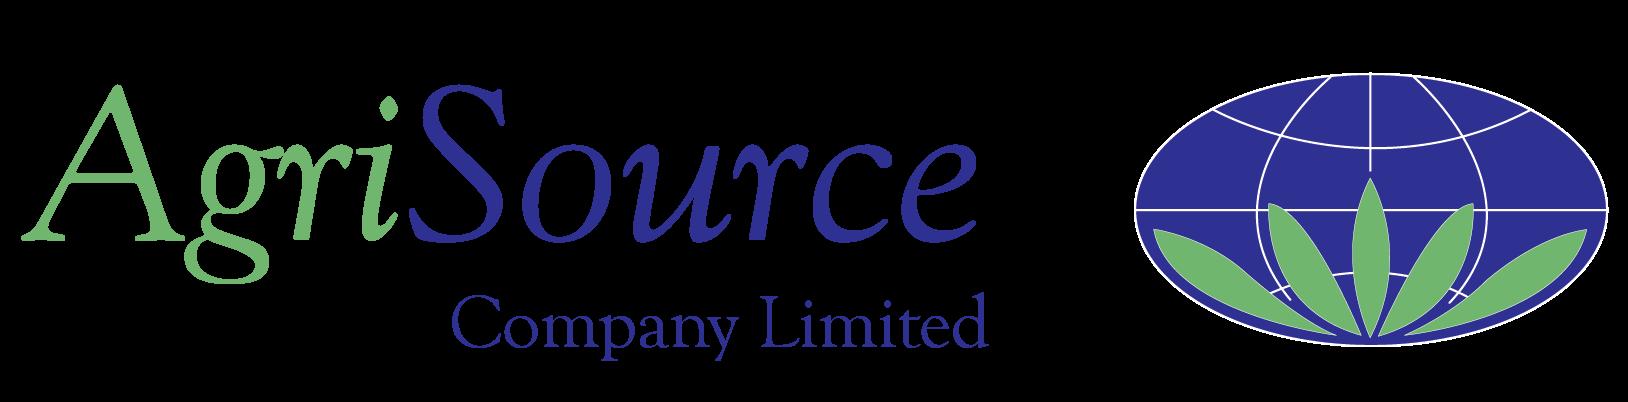 AgriSource Co., Ltd. Logo